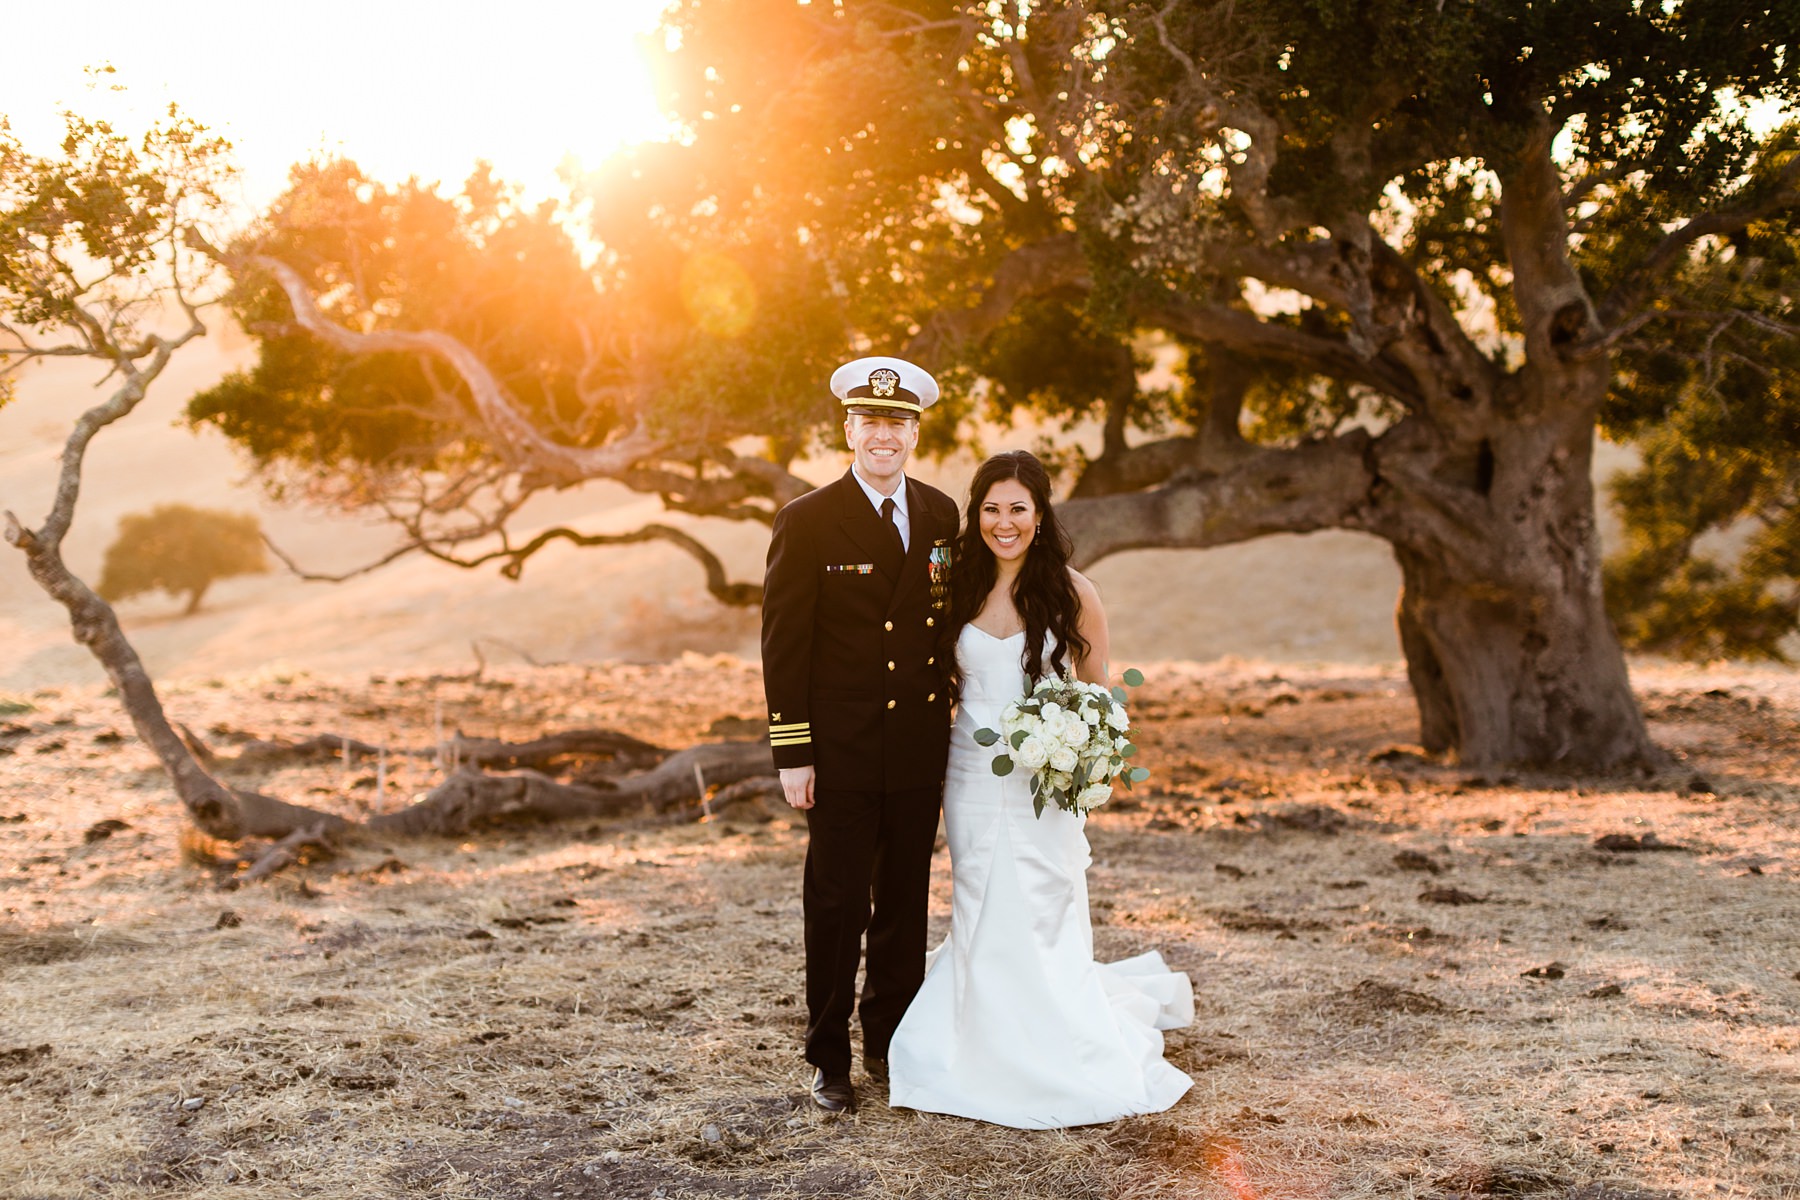 Spreafico farms wedding portraits at sunset overlooking hills of San Luis Obispo